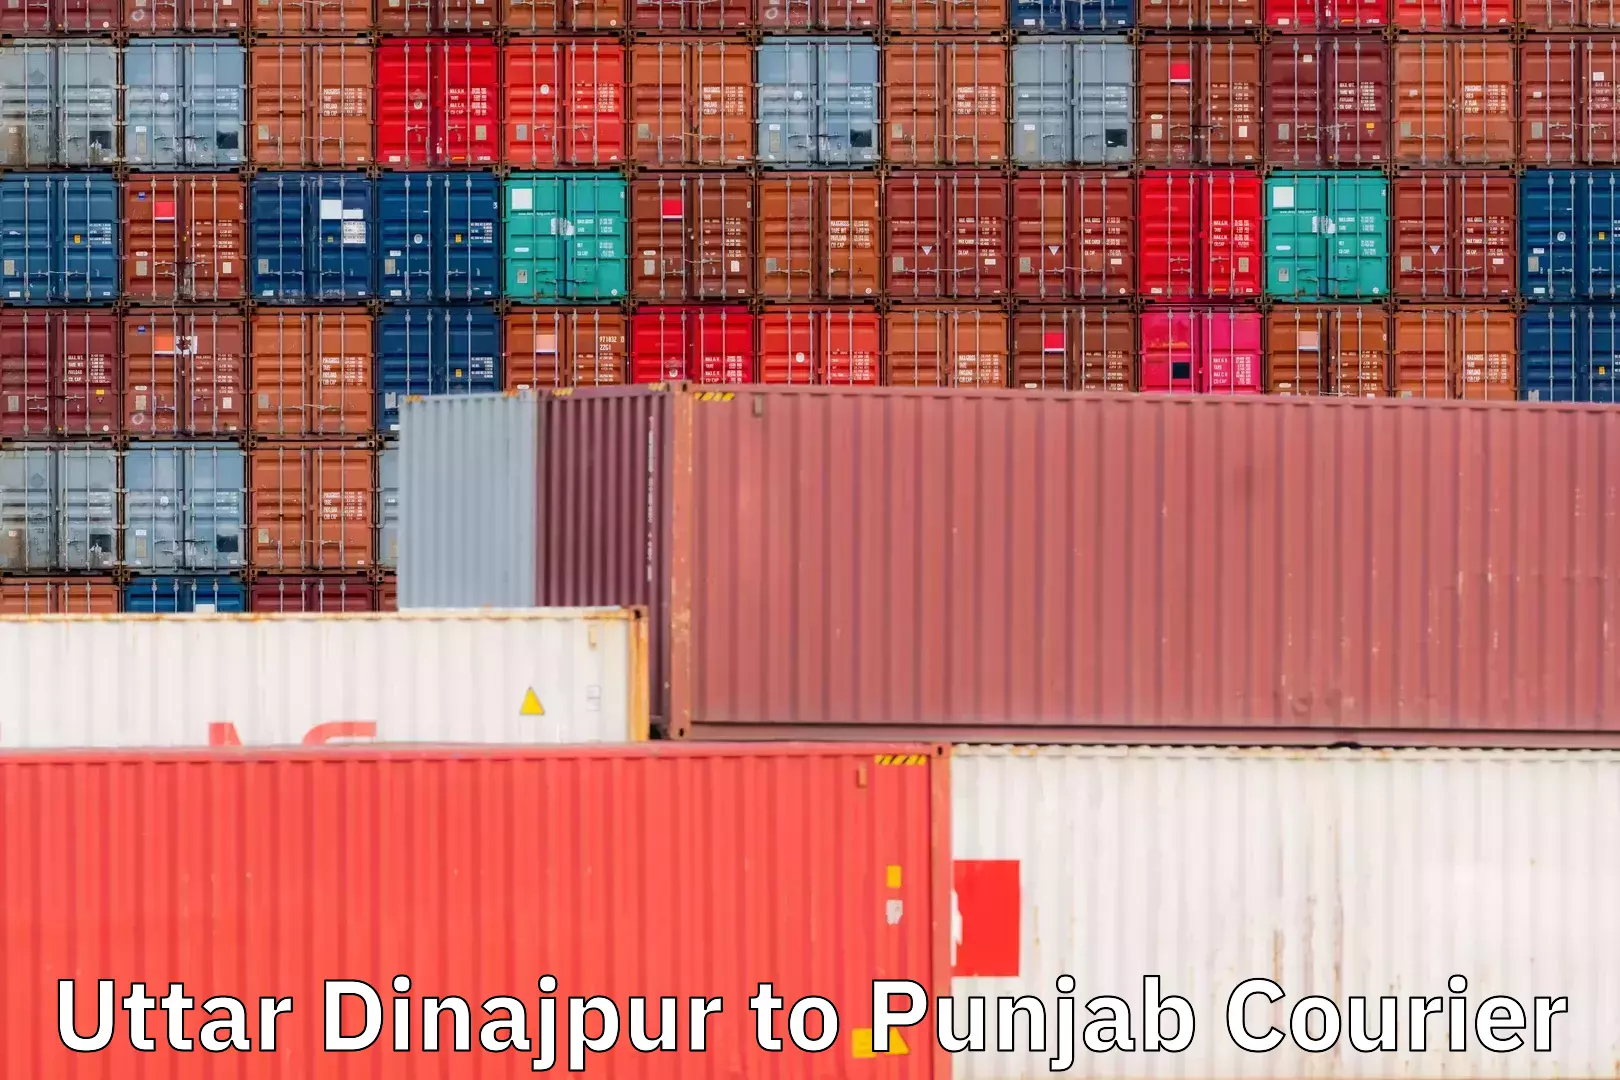 Advanced shipping technology Uttar Dinajpur to Punjab